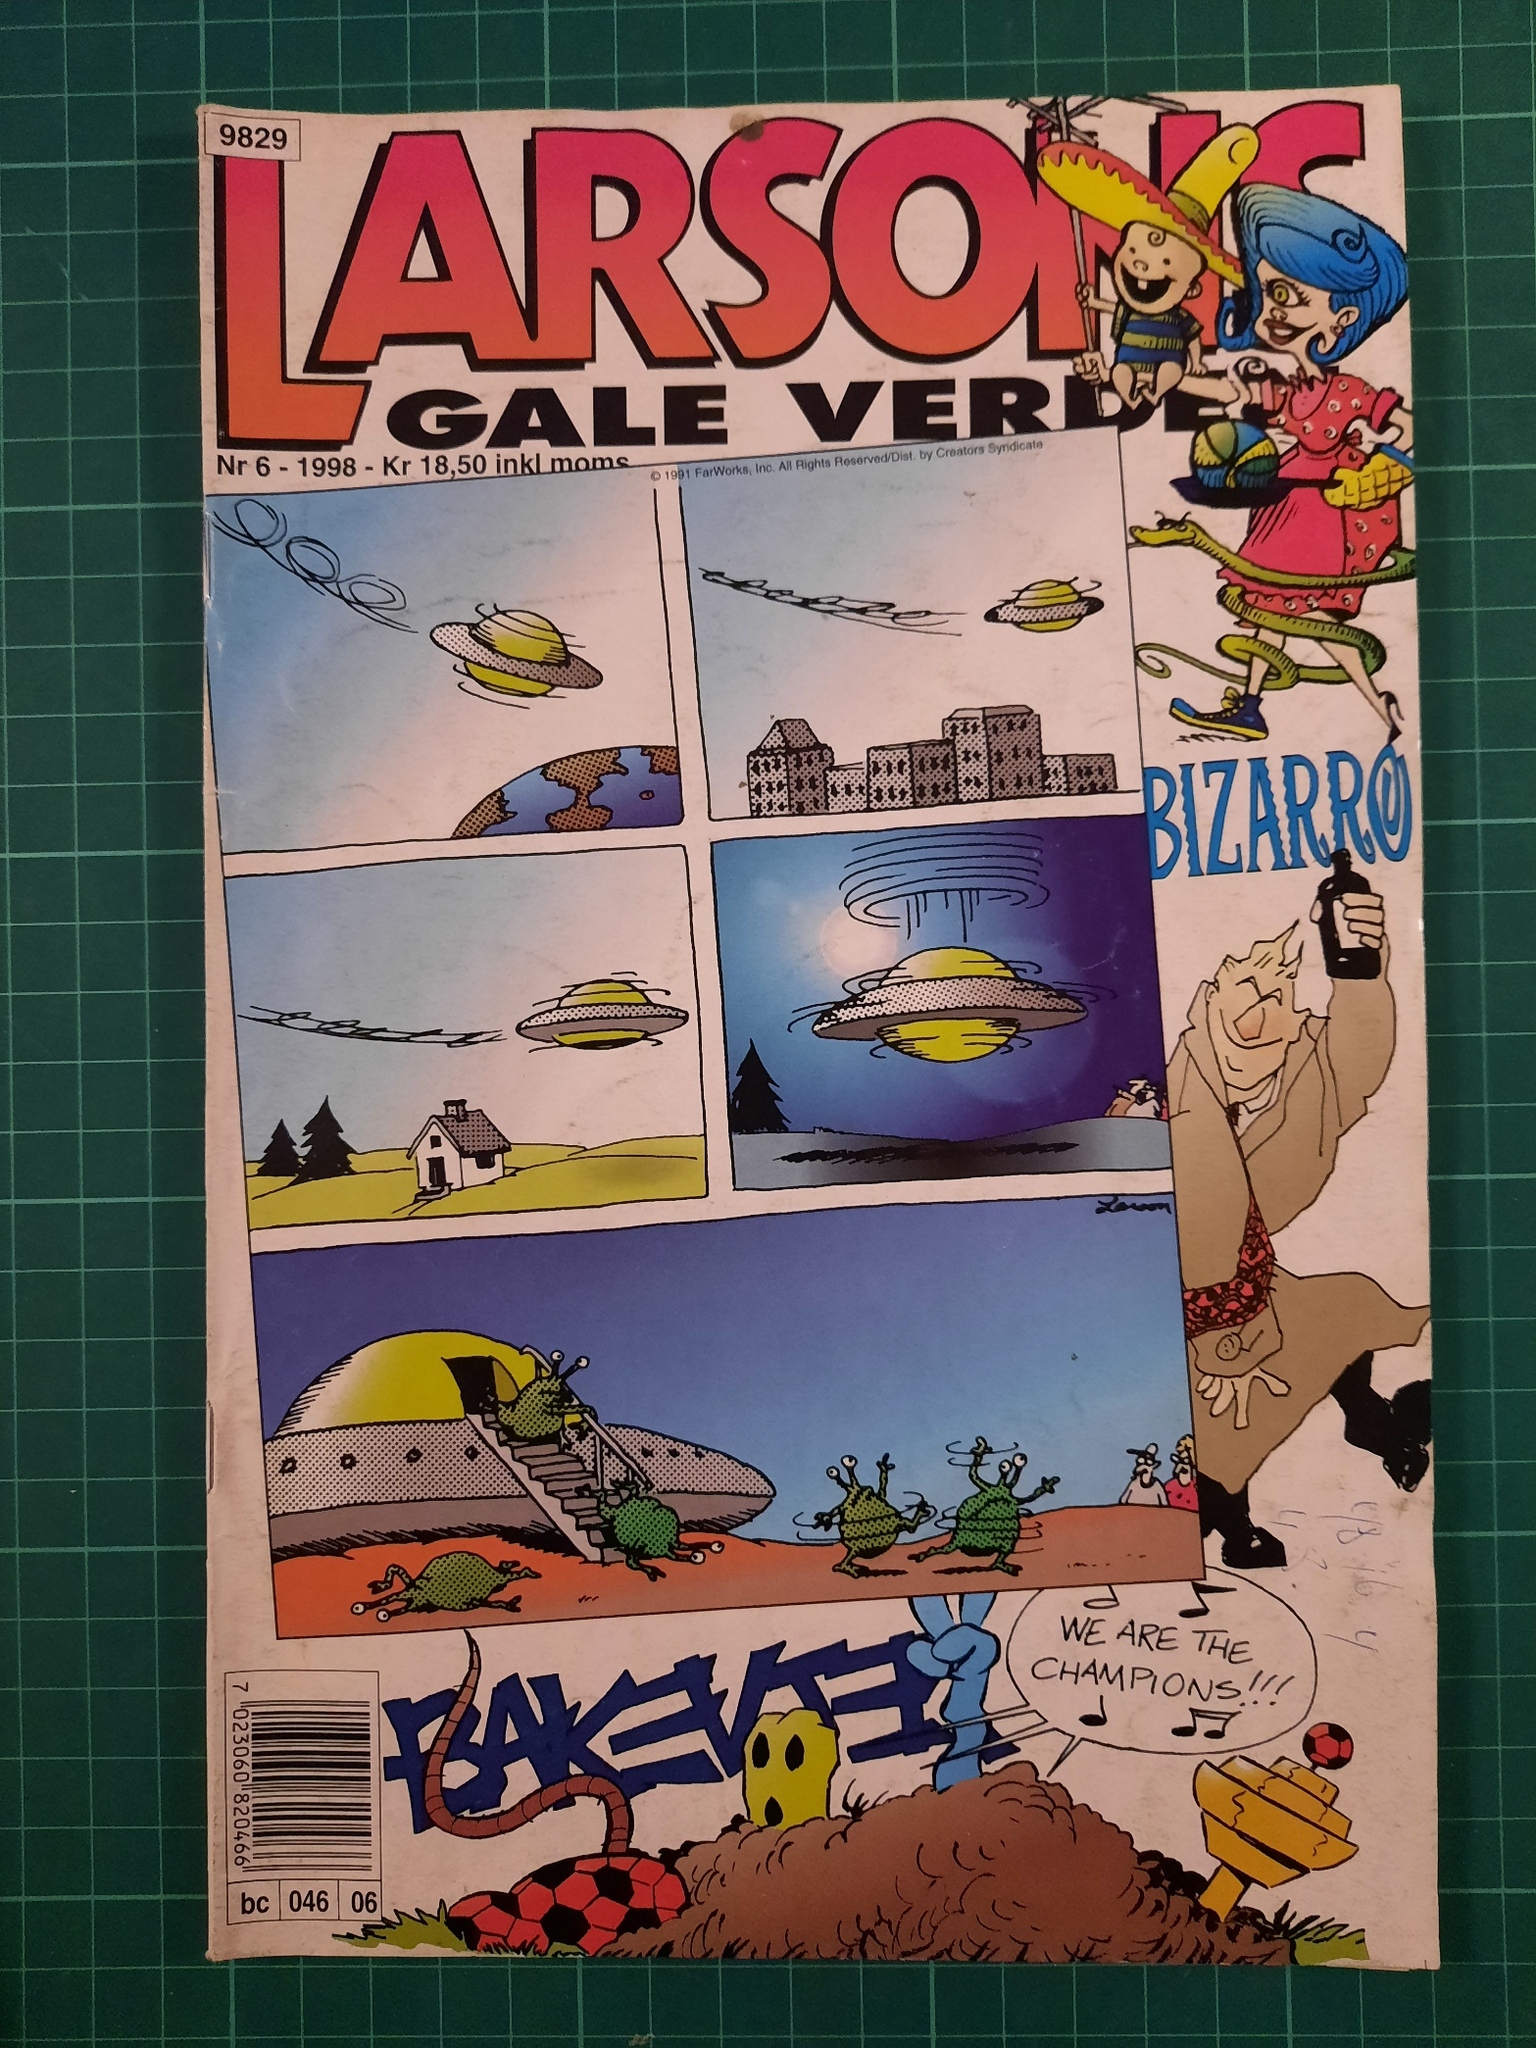 Larsons gale verden 1998 - 06